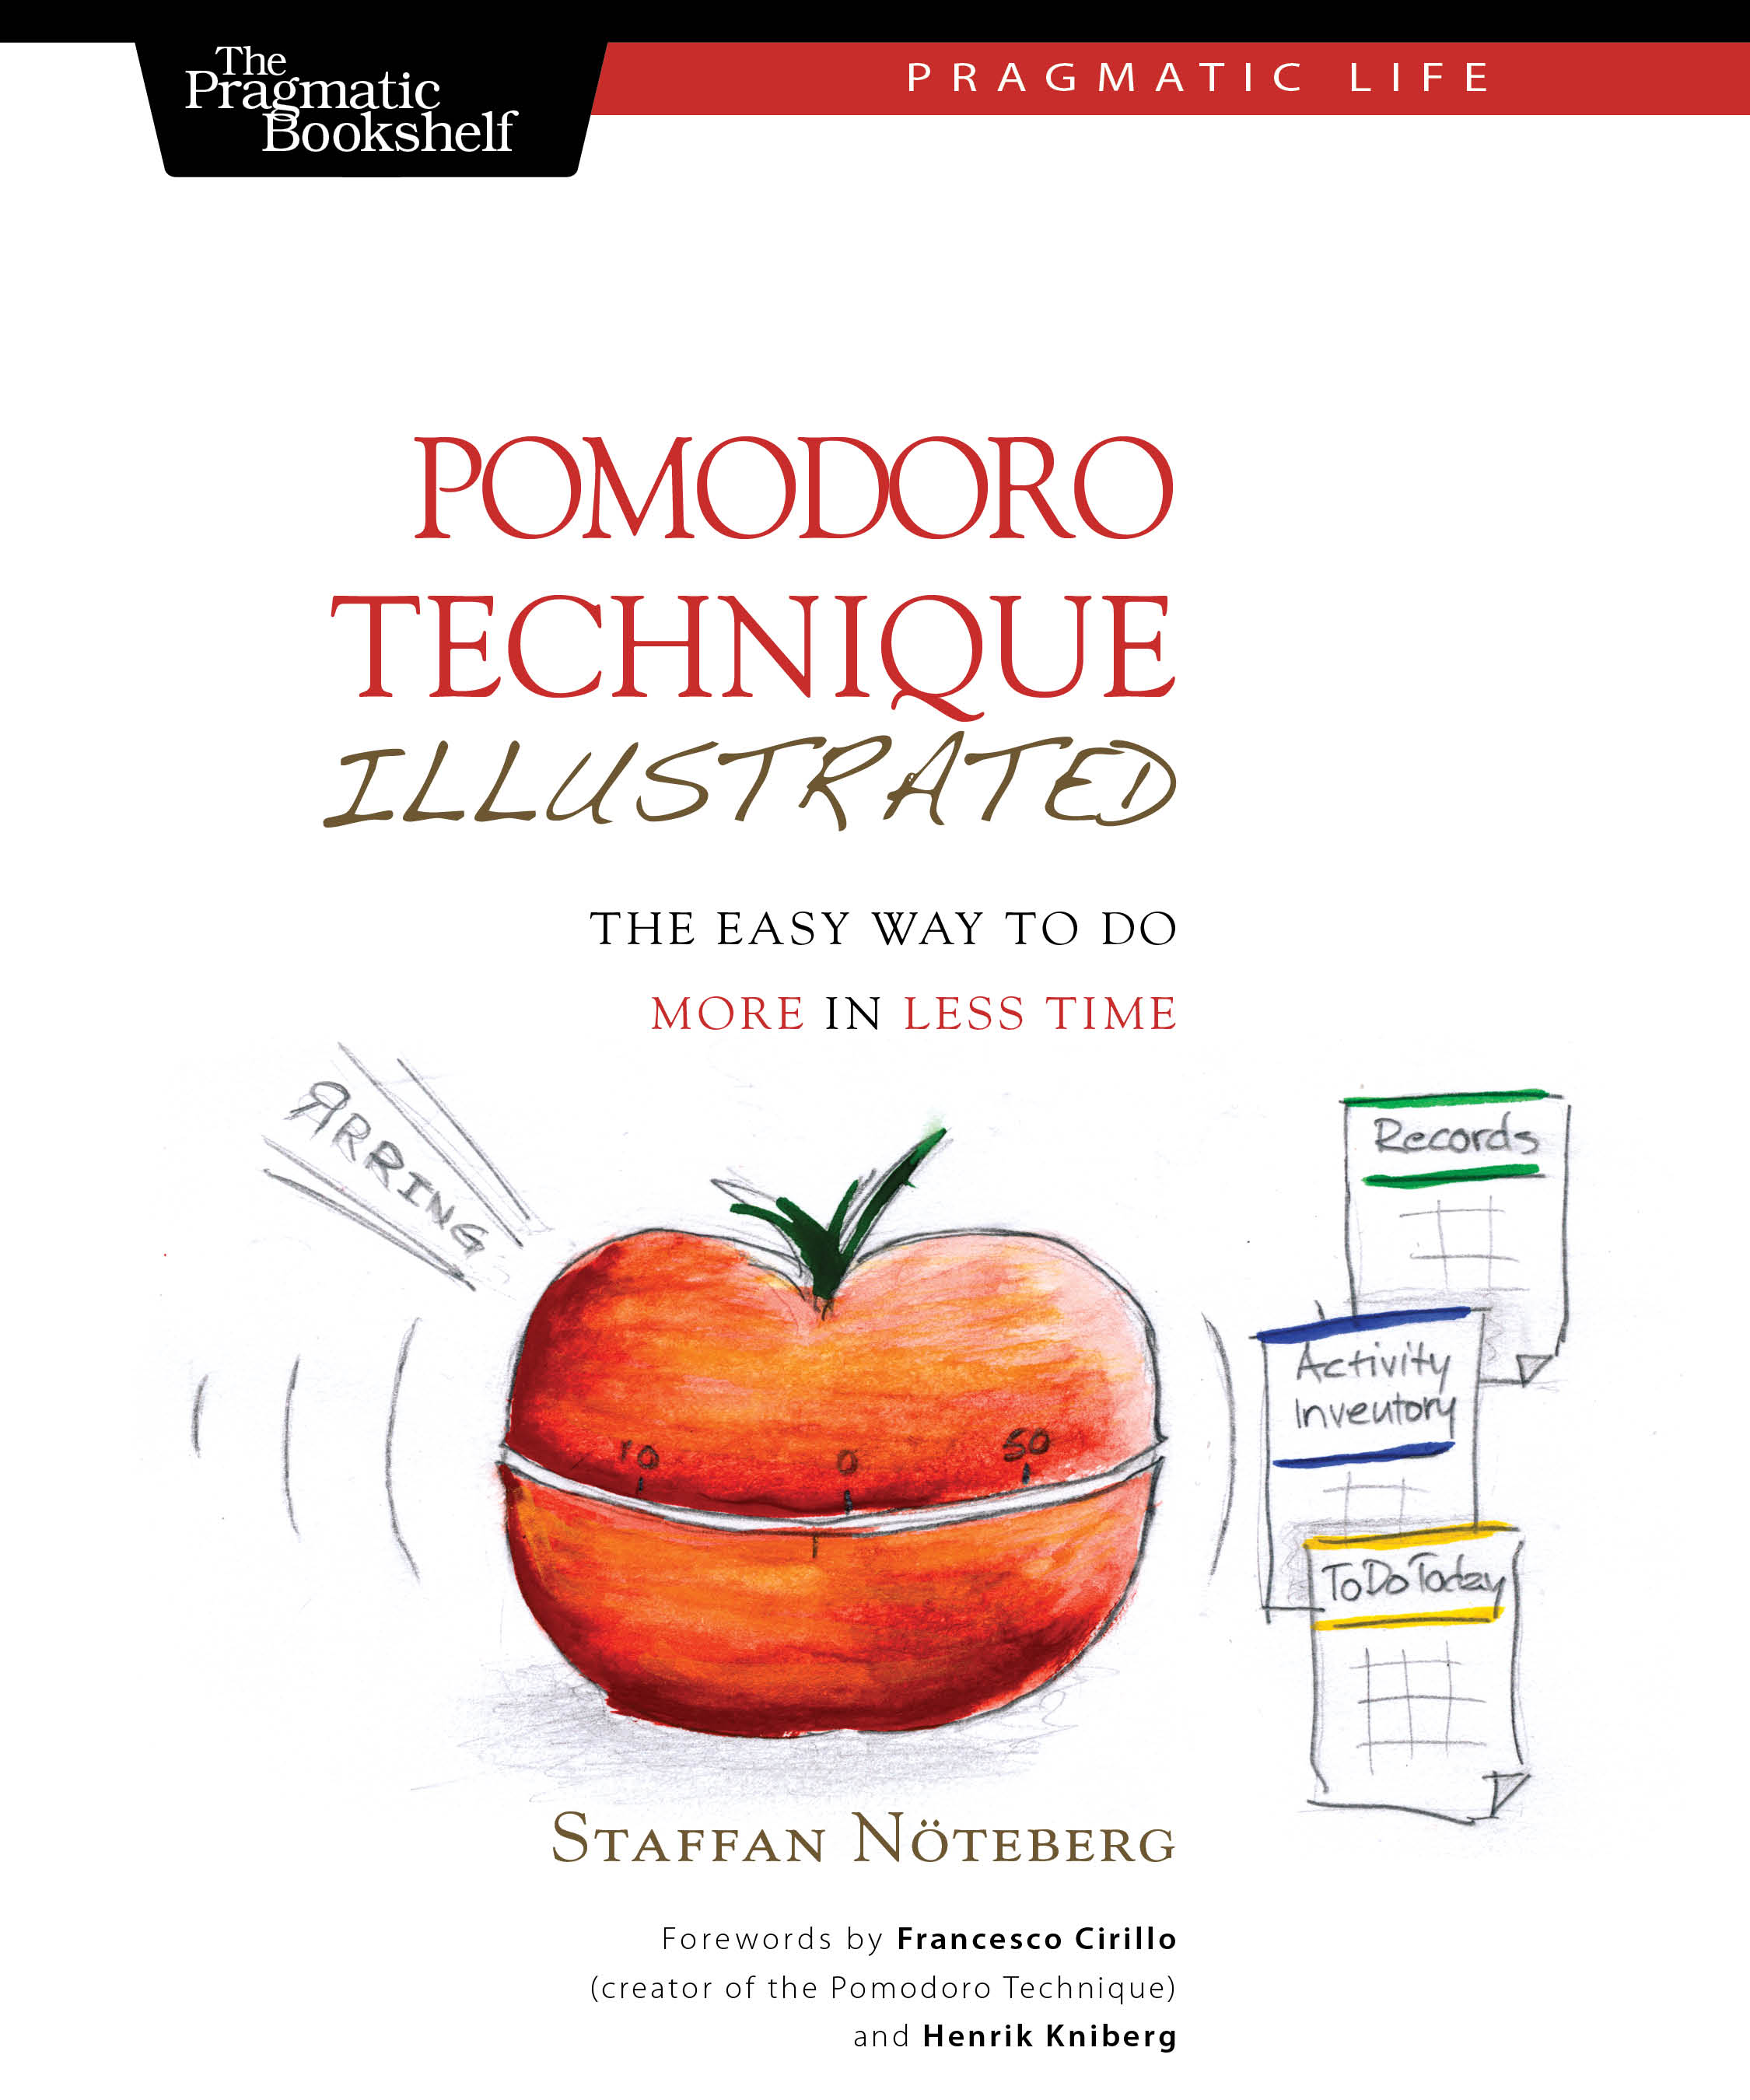 Apply the Pomodoro Technique to Writing, by S M Mamunur Rahman